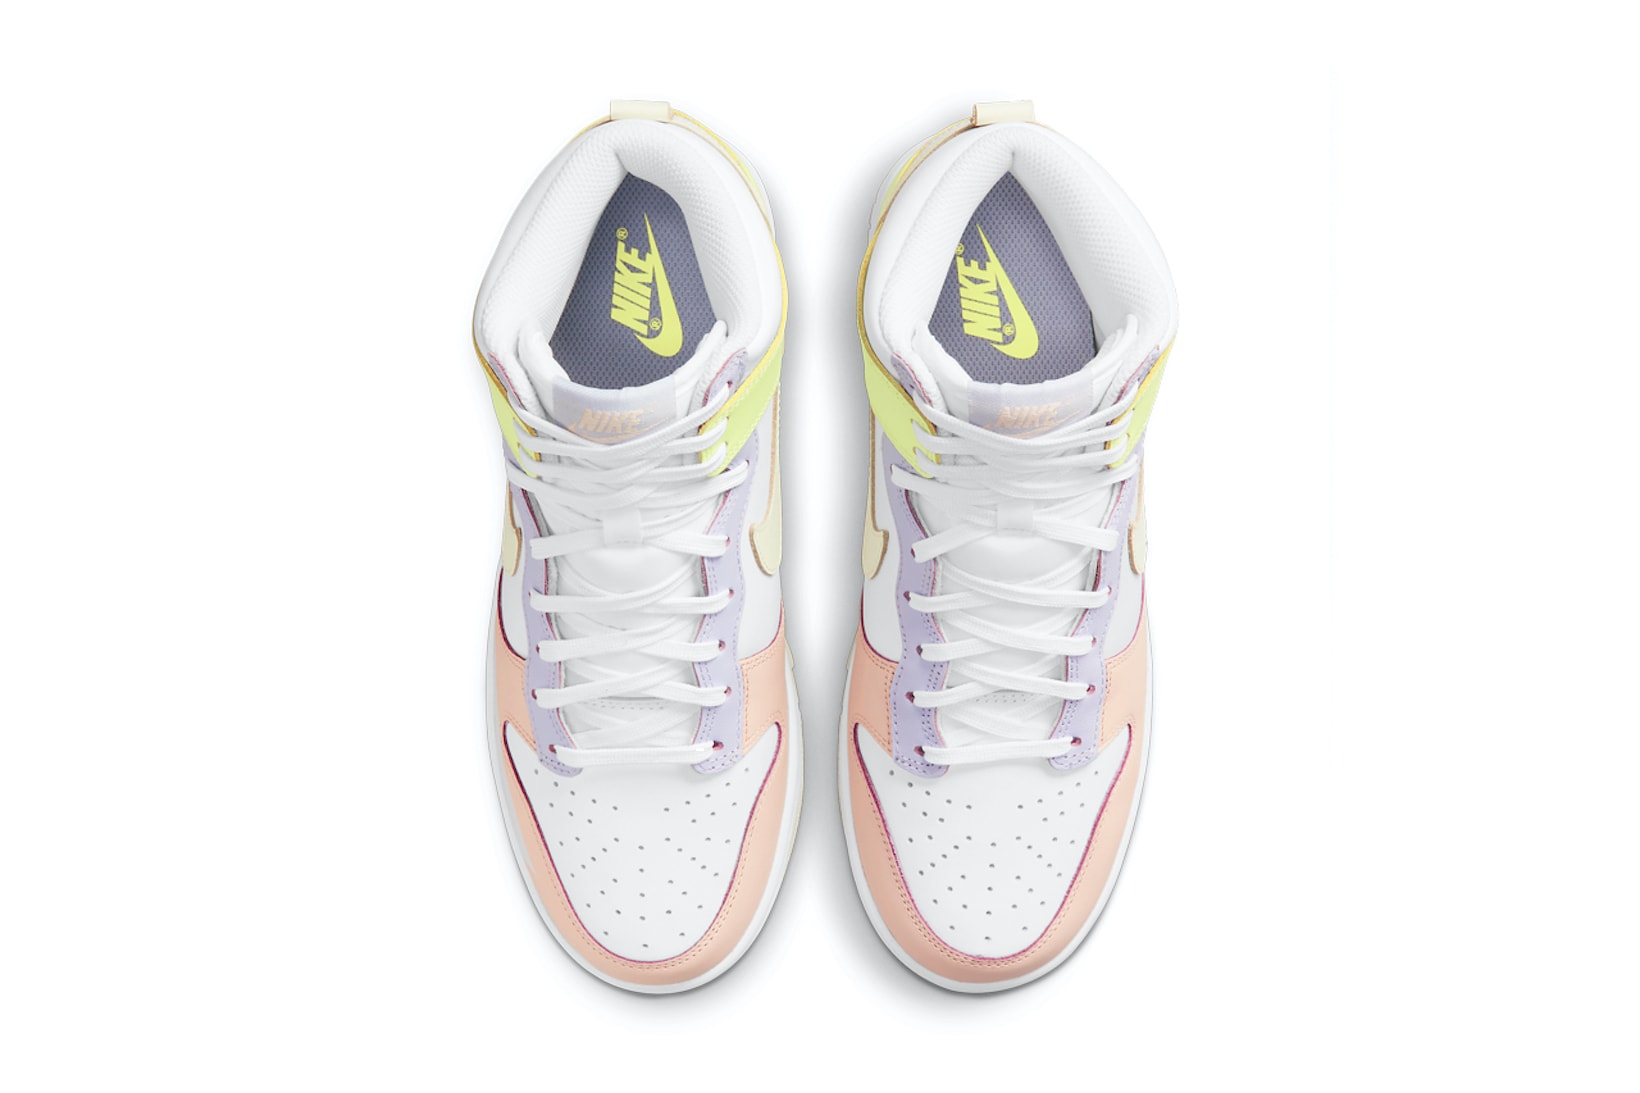 Nike Women's Dunk High Lemon Twist Sneakers Footwear Shoes Kicks Yellow Pink White Purple Aerial Top View Insole